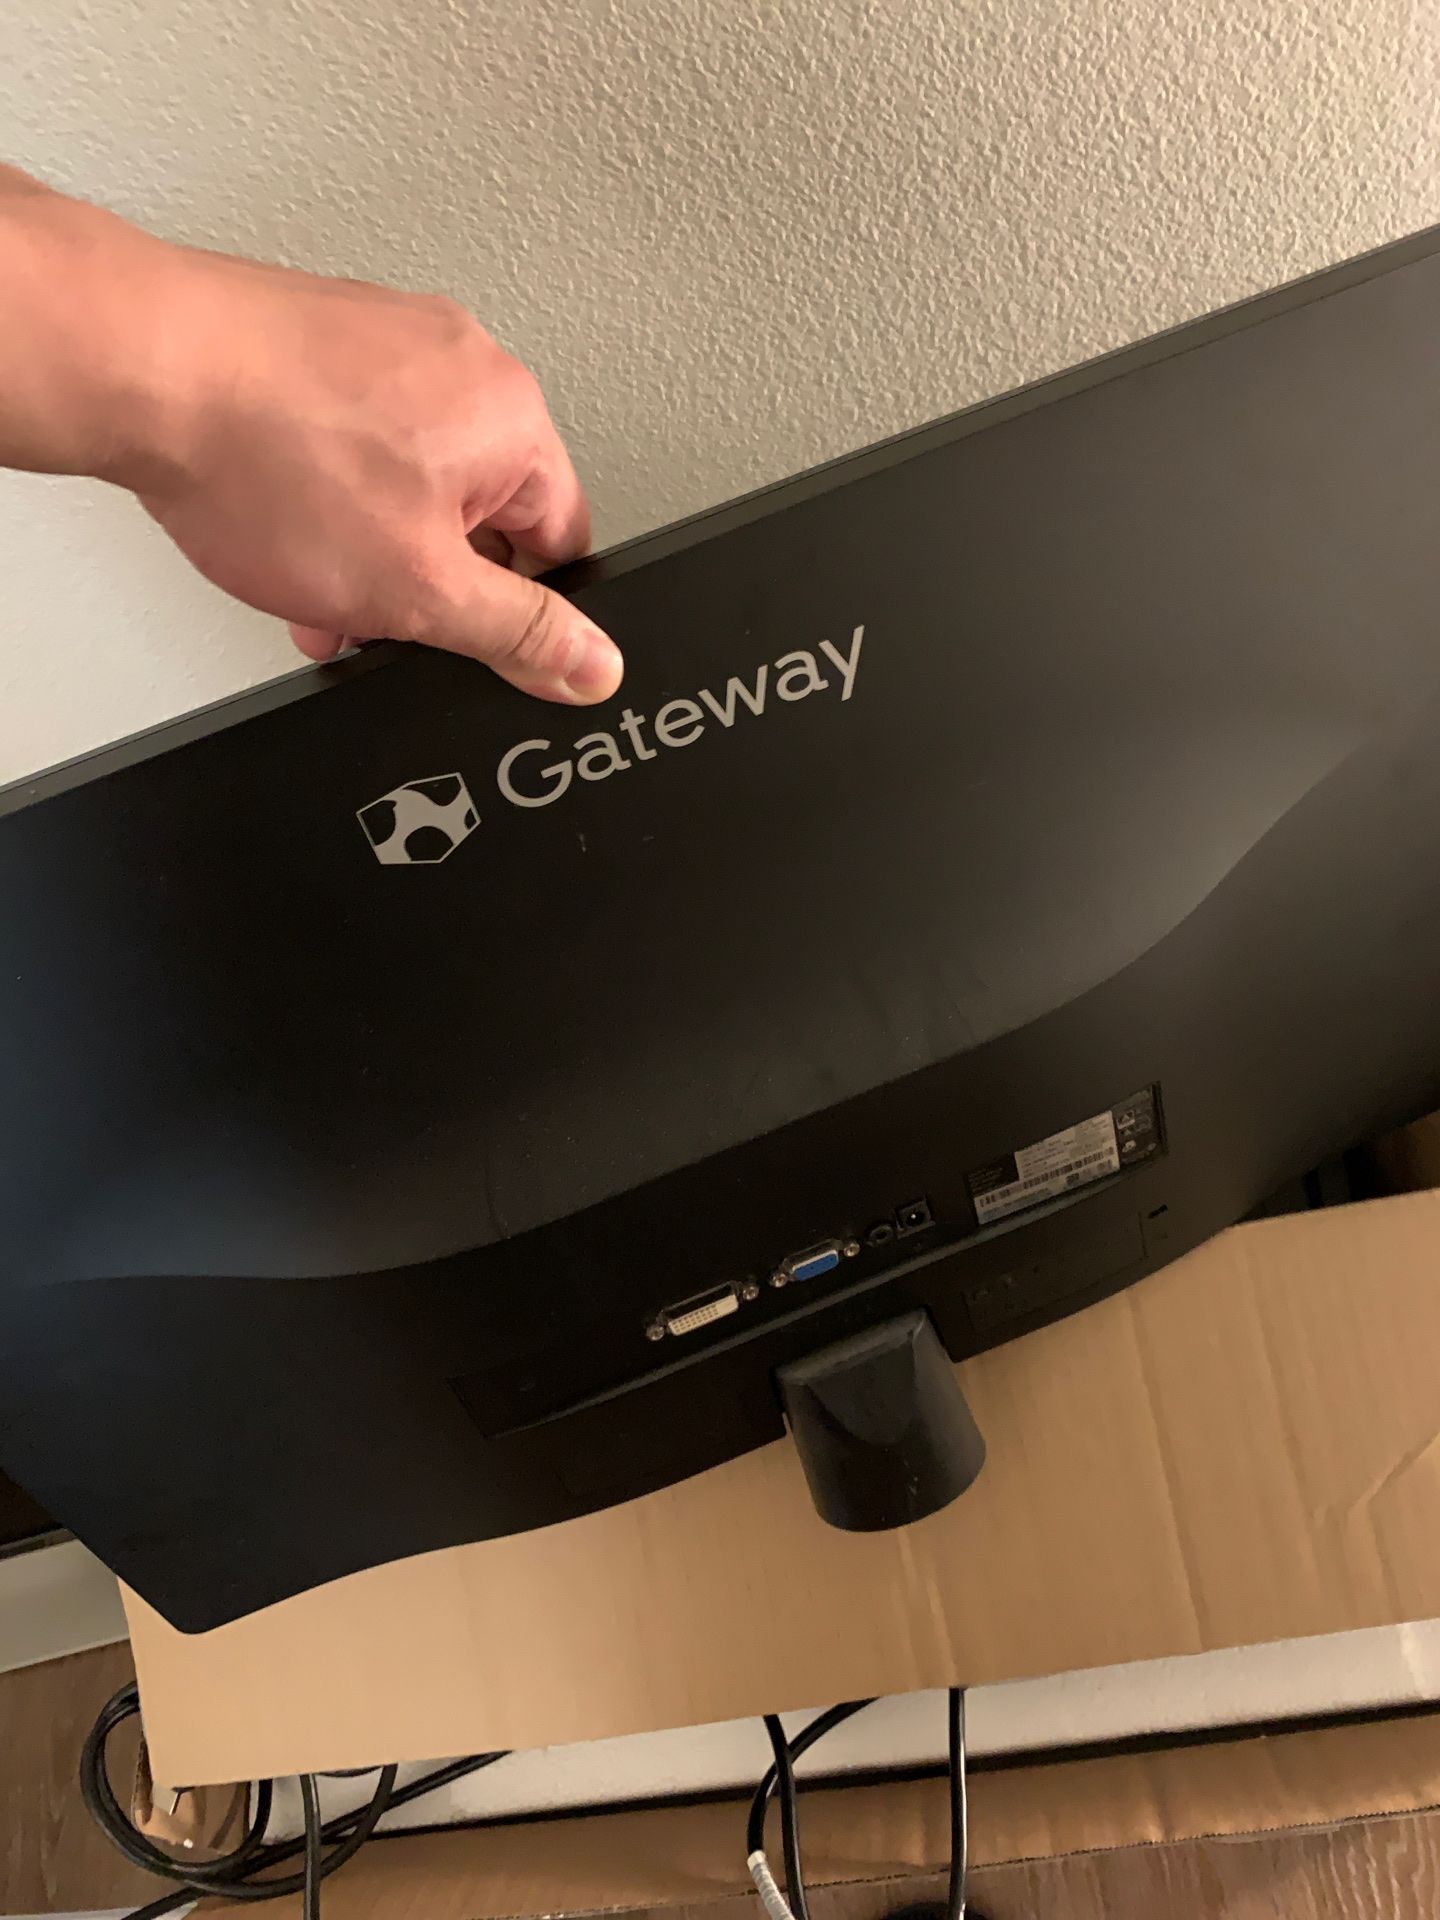 Gateway computer monitor